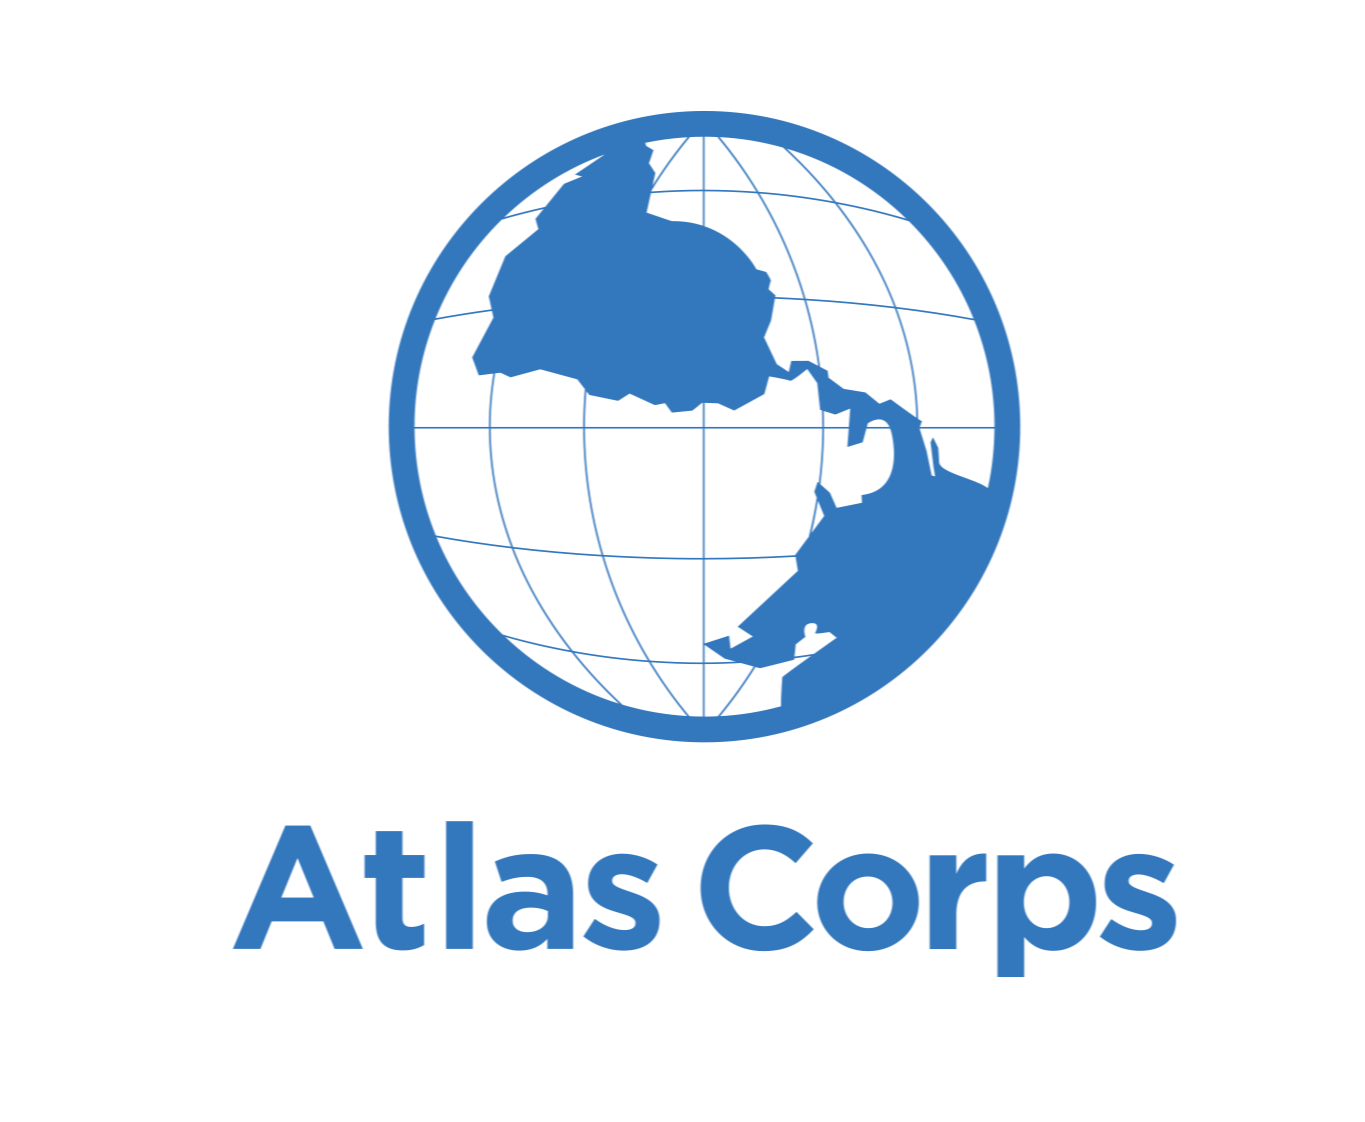 Atlas Corps logo